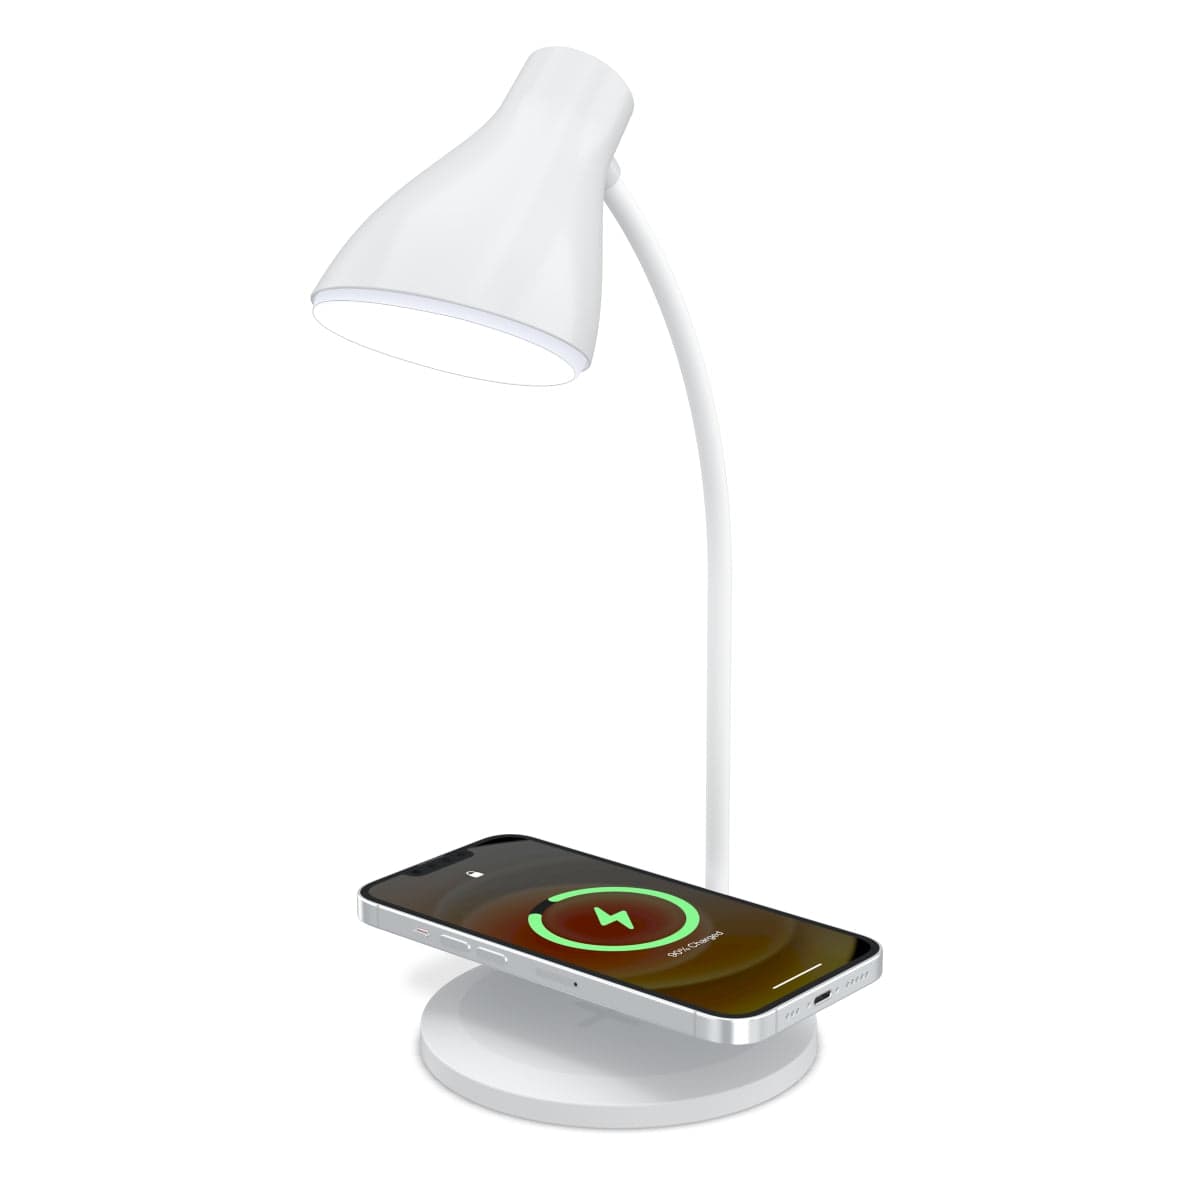 PORTRONICS-BRILLO 3 Lamp Wireless Charger